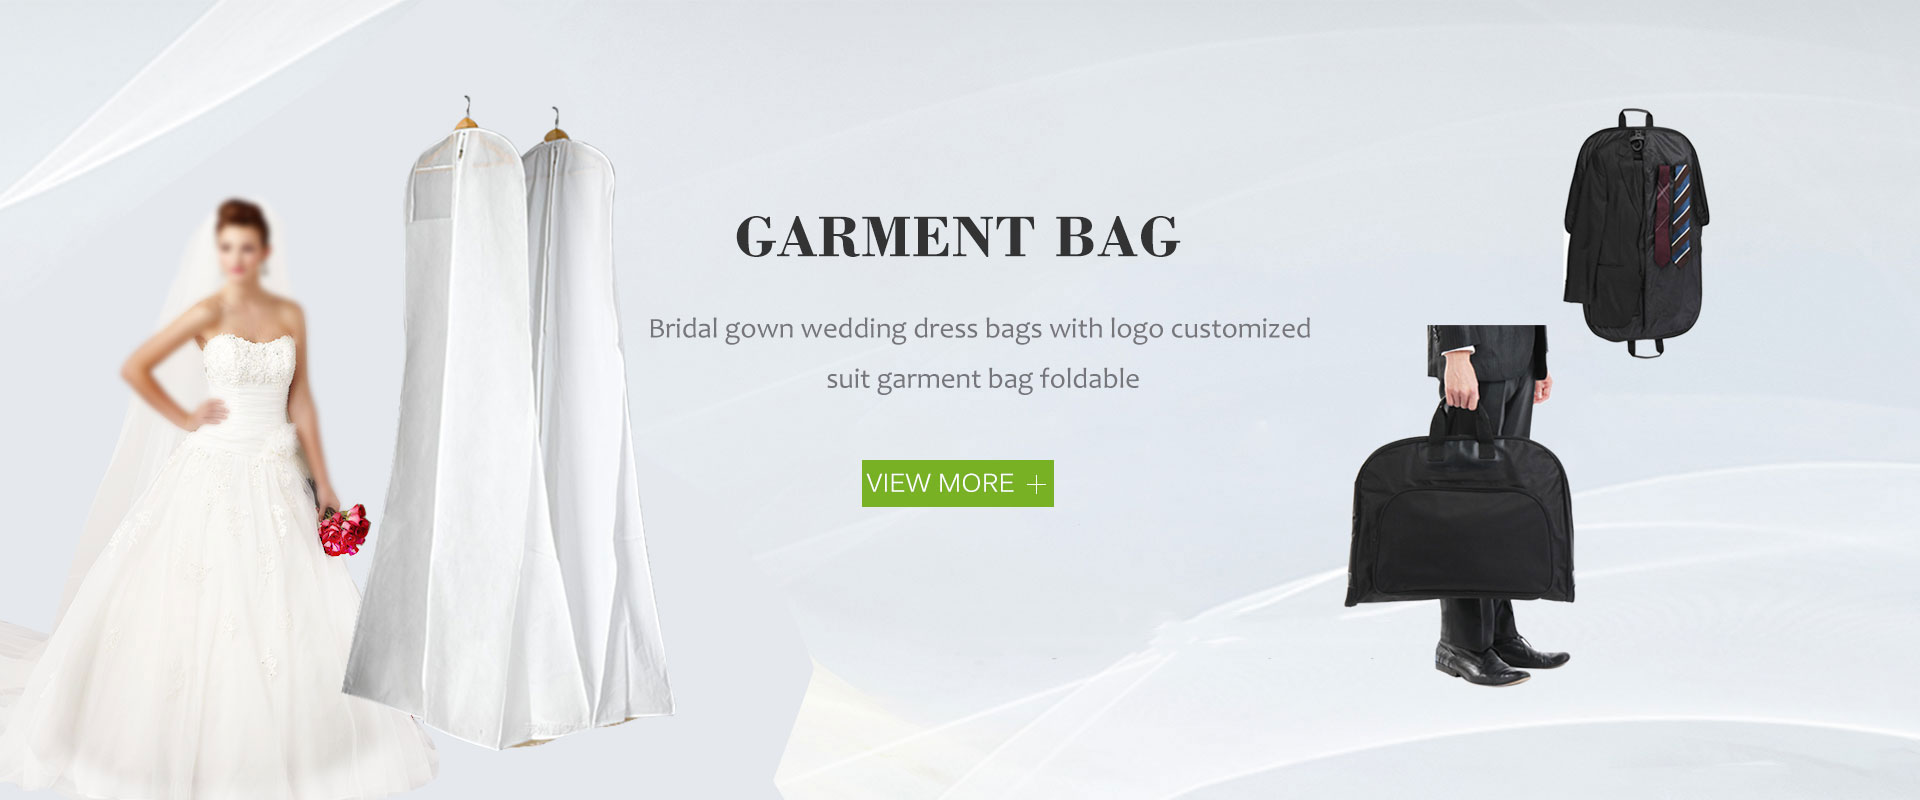 Garment Bags